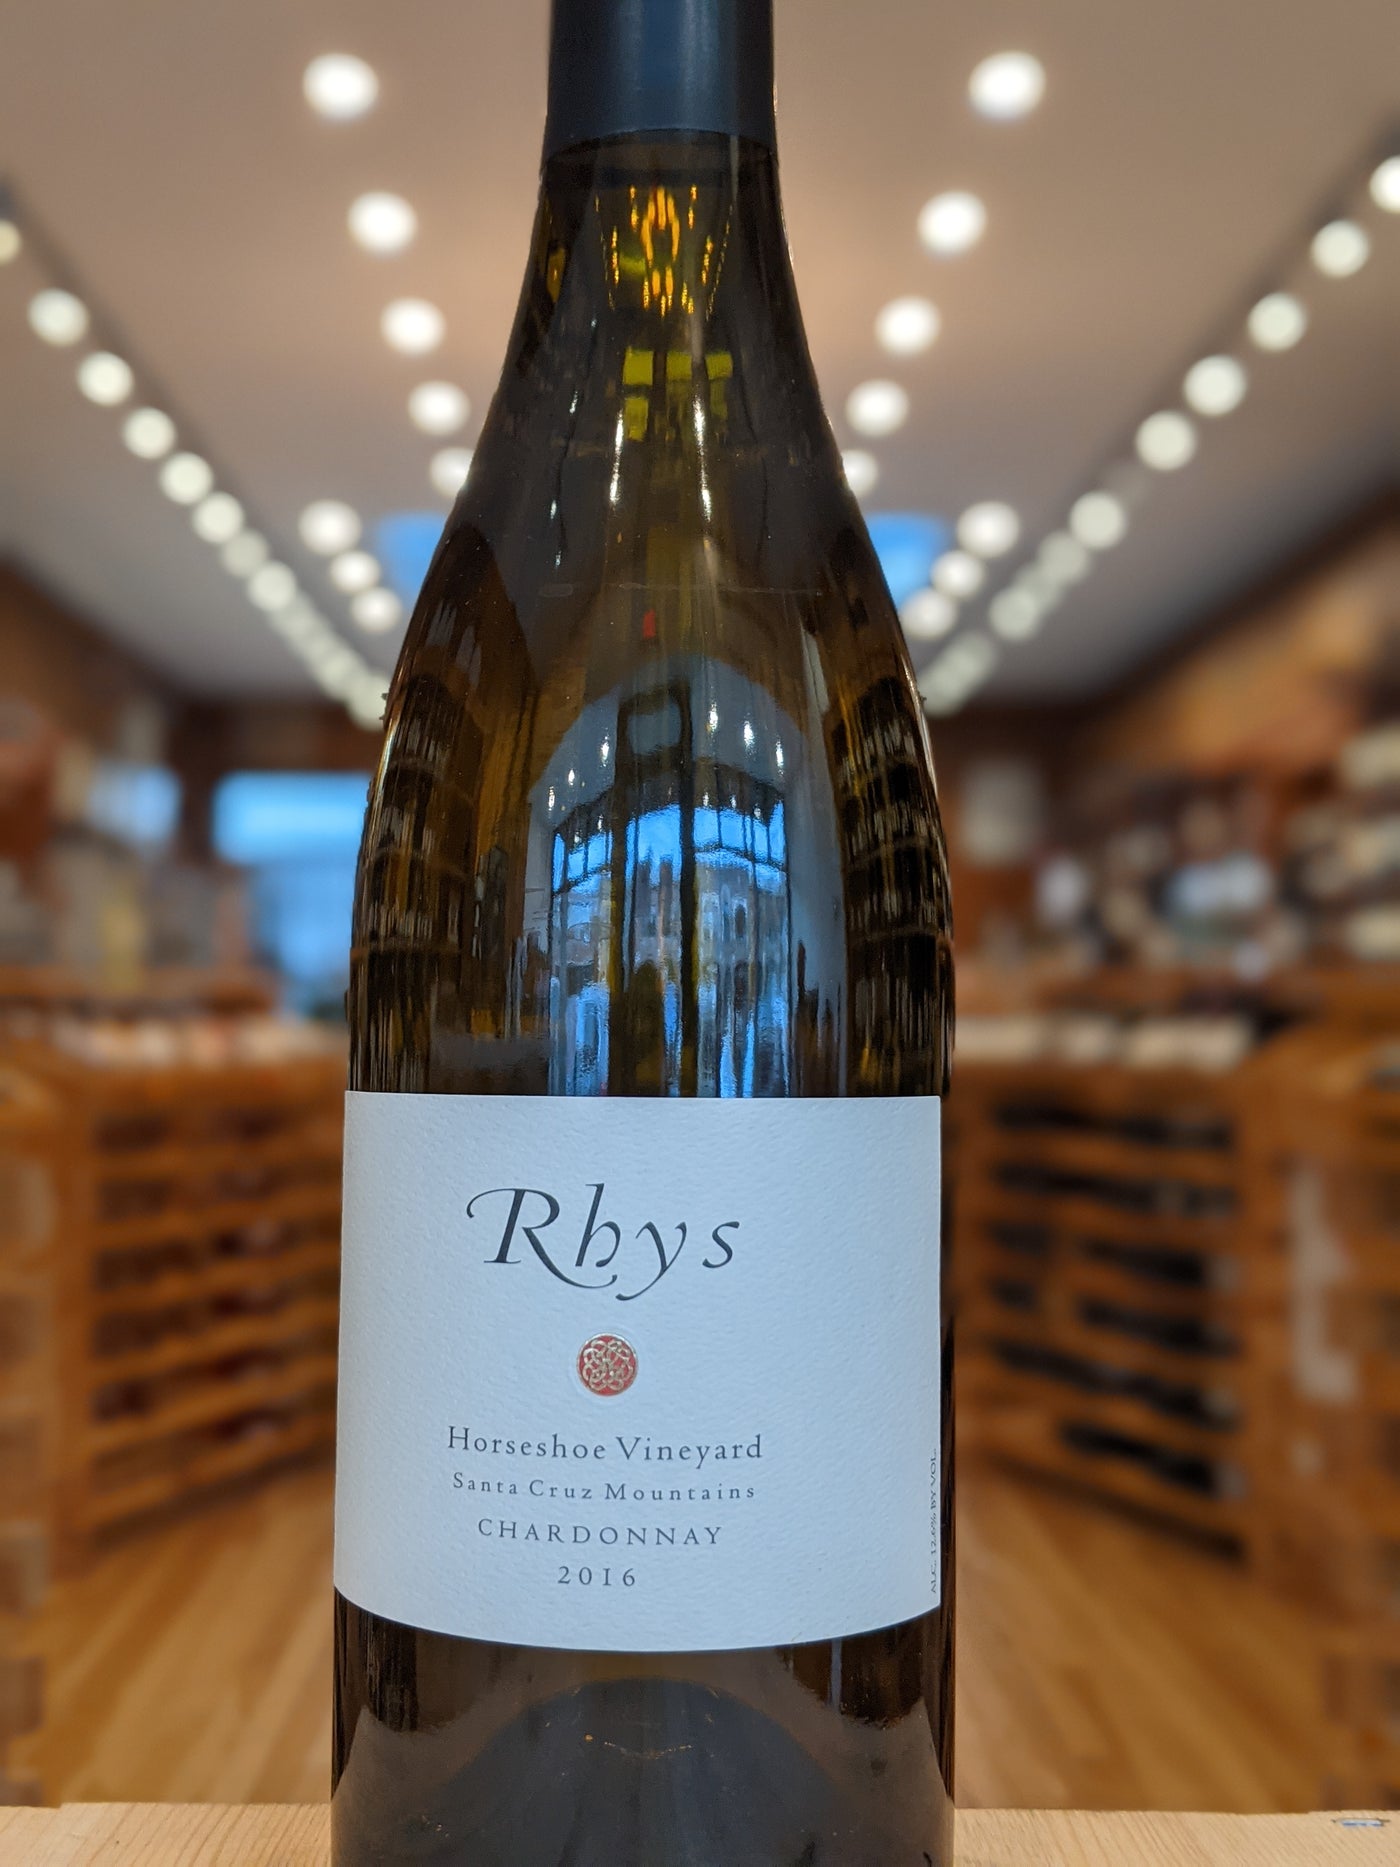 Rhys Santa Cruz Mountains Horseshoe Vineyard Chardonnay 2016